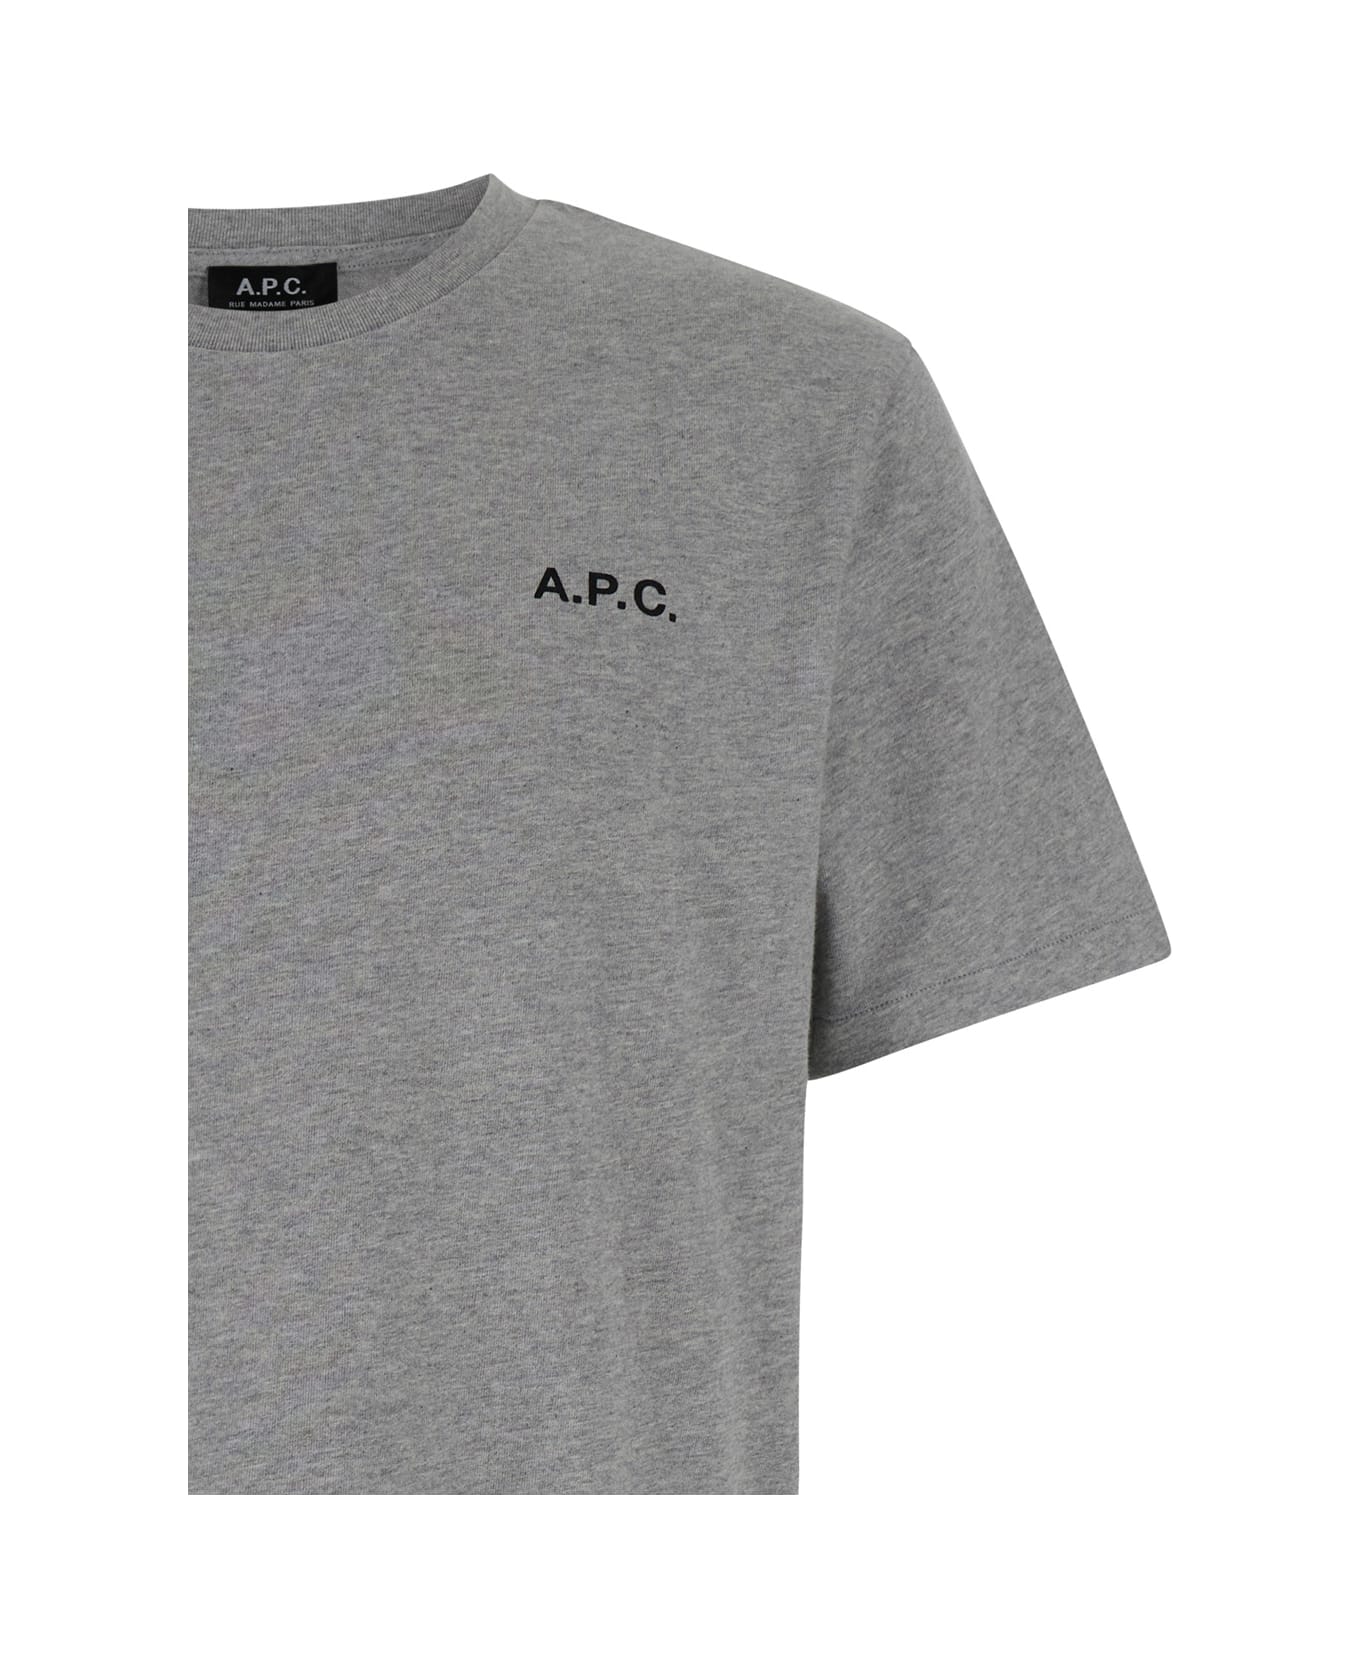 A.P.C. T-shirt Wave T-Shirt - LIGHT GREY